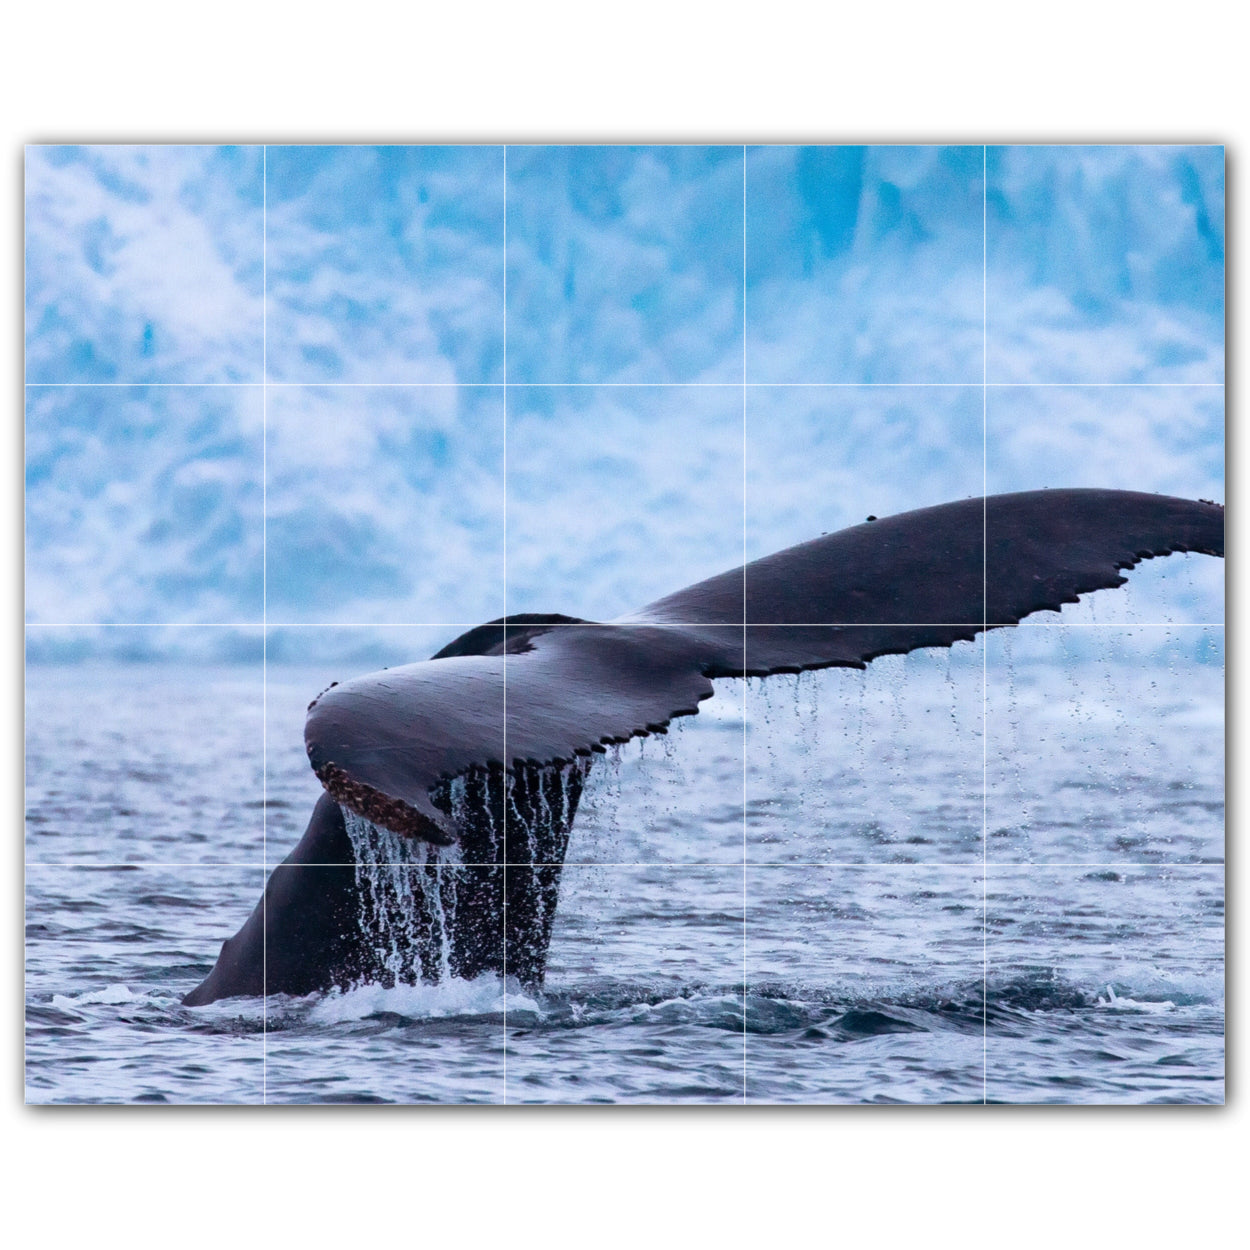 Whale Photo Tile Murals